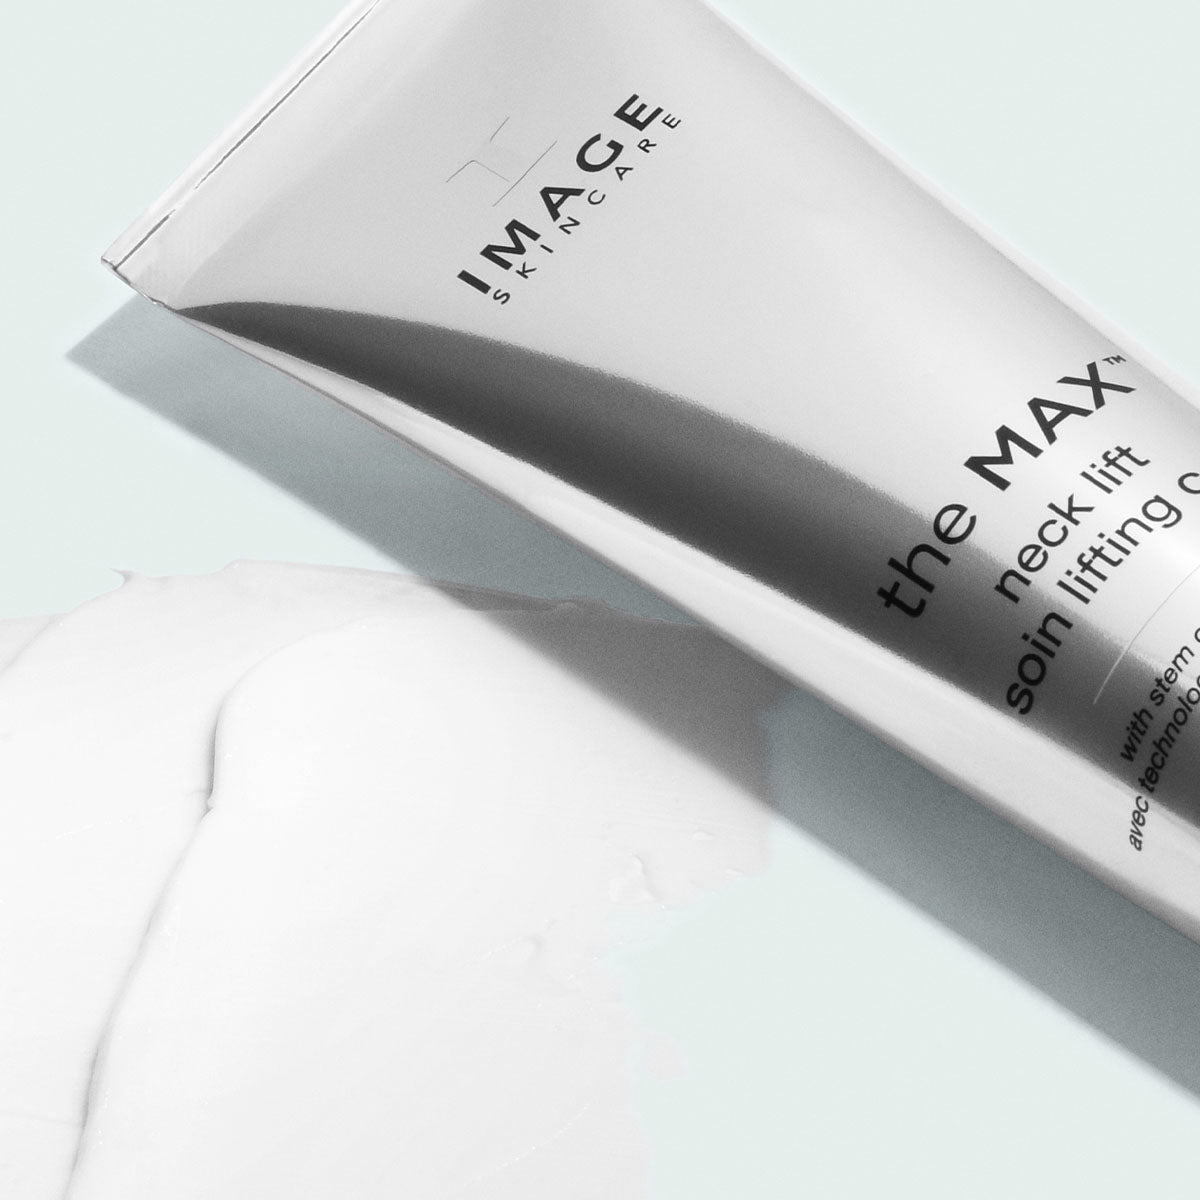 MAX™ neck lift | IMAGE Skincare